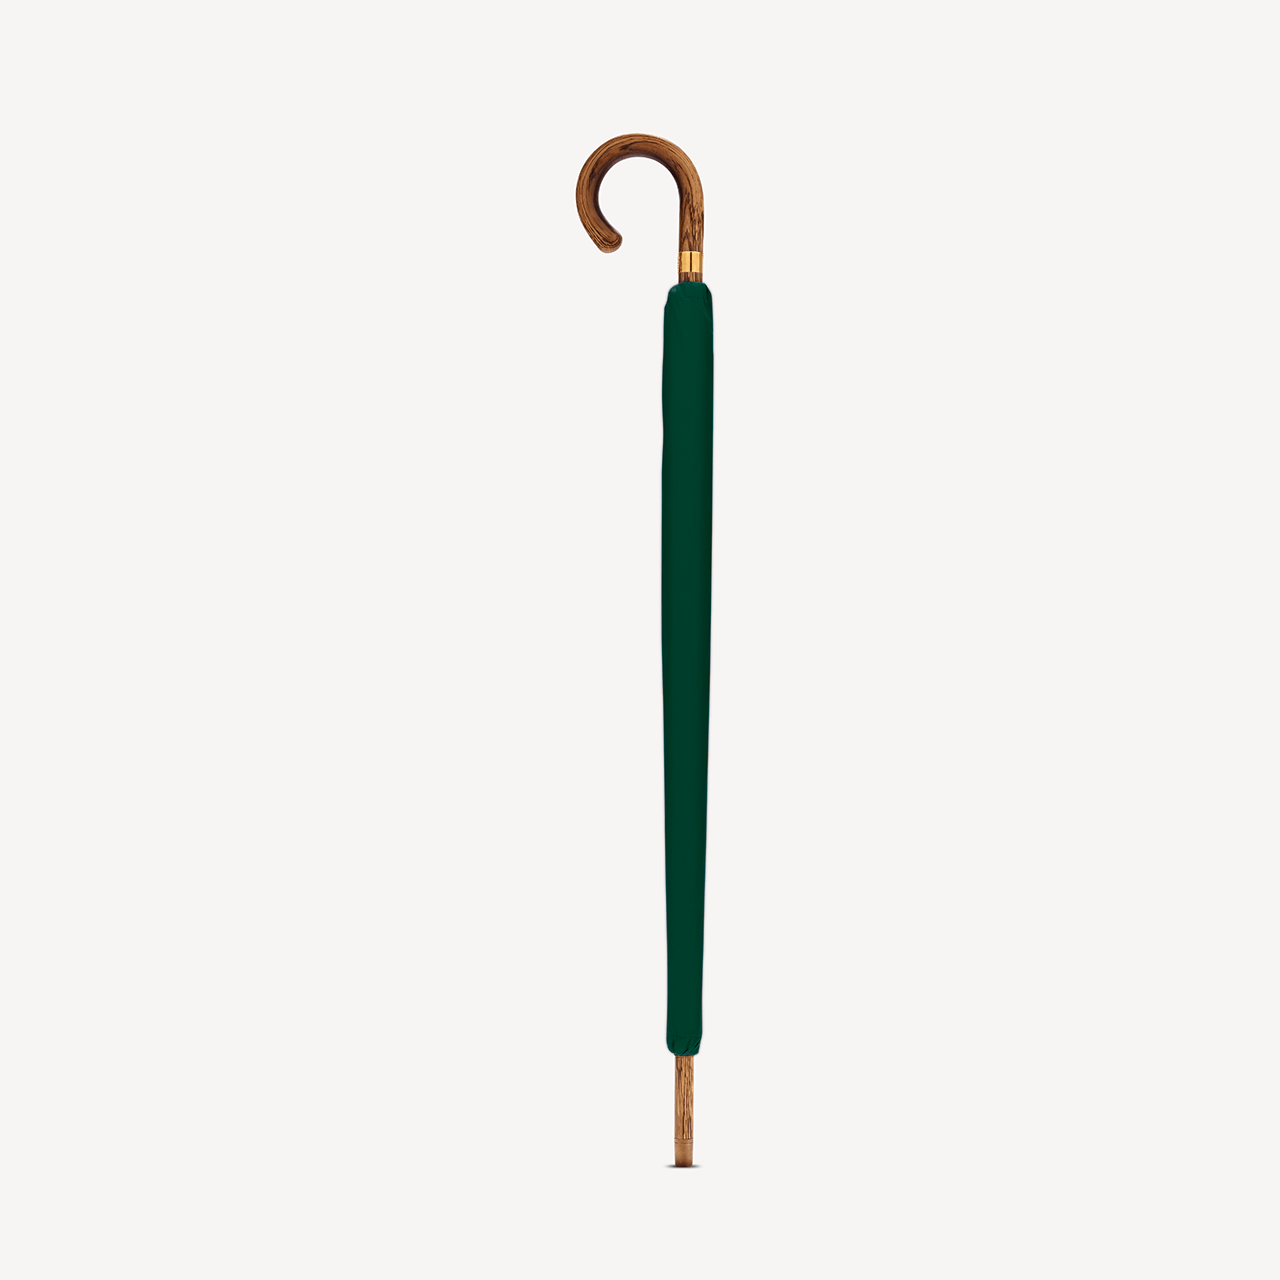 Oak Umbrella for Men - Jaguar Green - Swaine